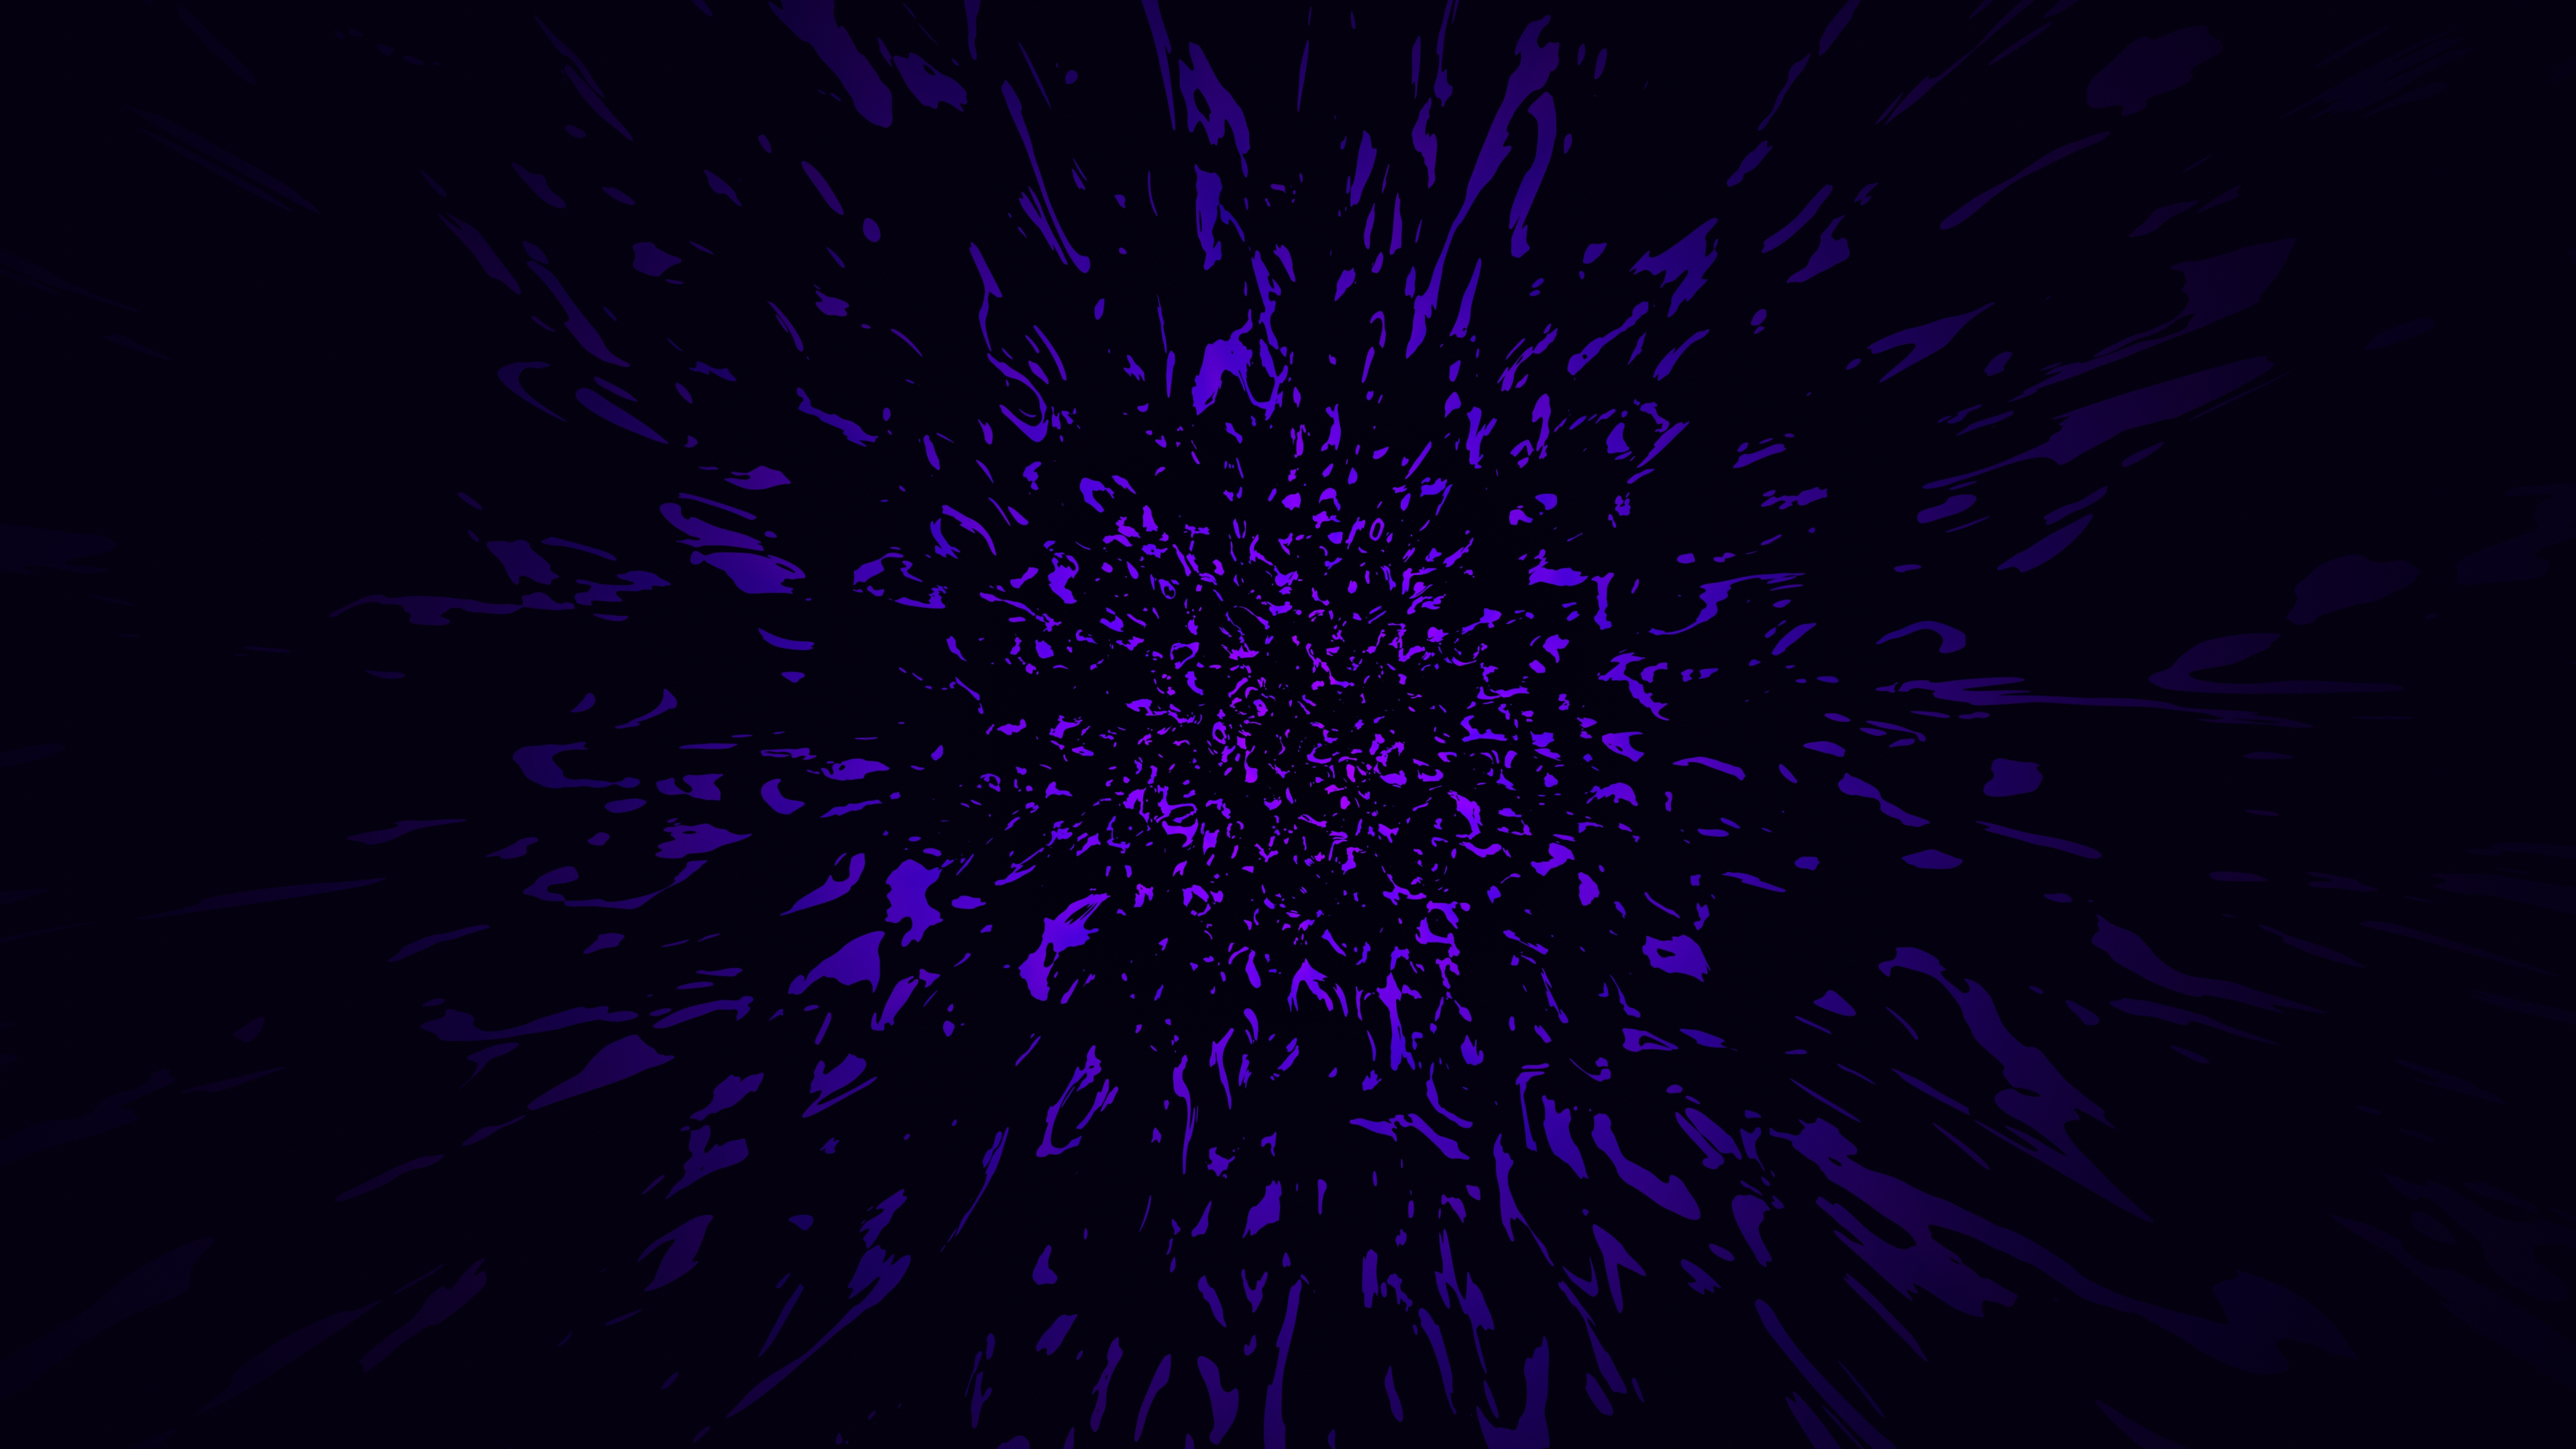 Download wallpaper 3840x2160 violet bend, abstract, dark 4k wallpaper, uhd  wallpaper, 16:9 widescreen 3840x2160 hd background, 25281